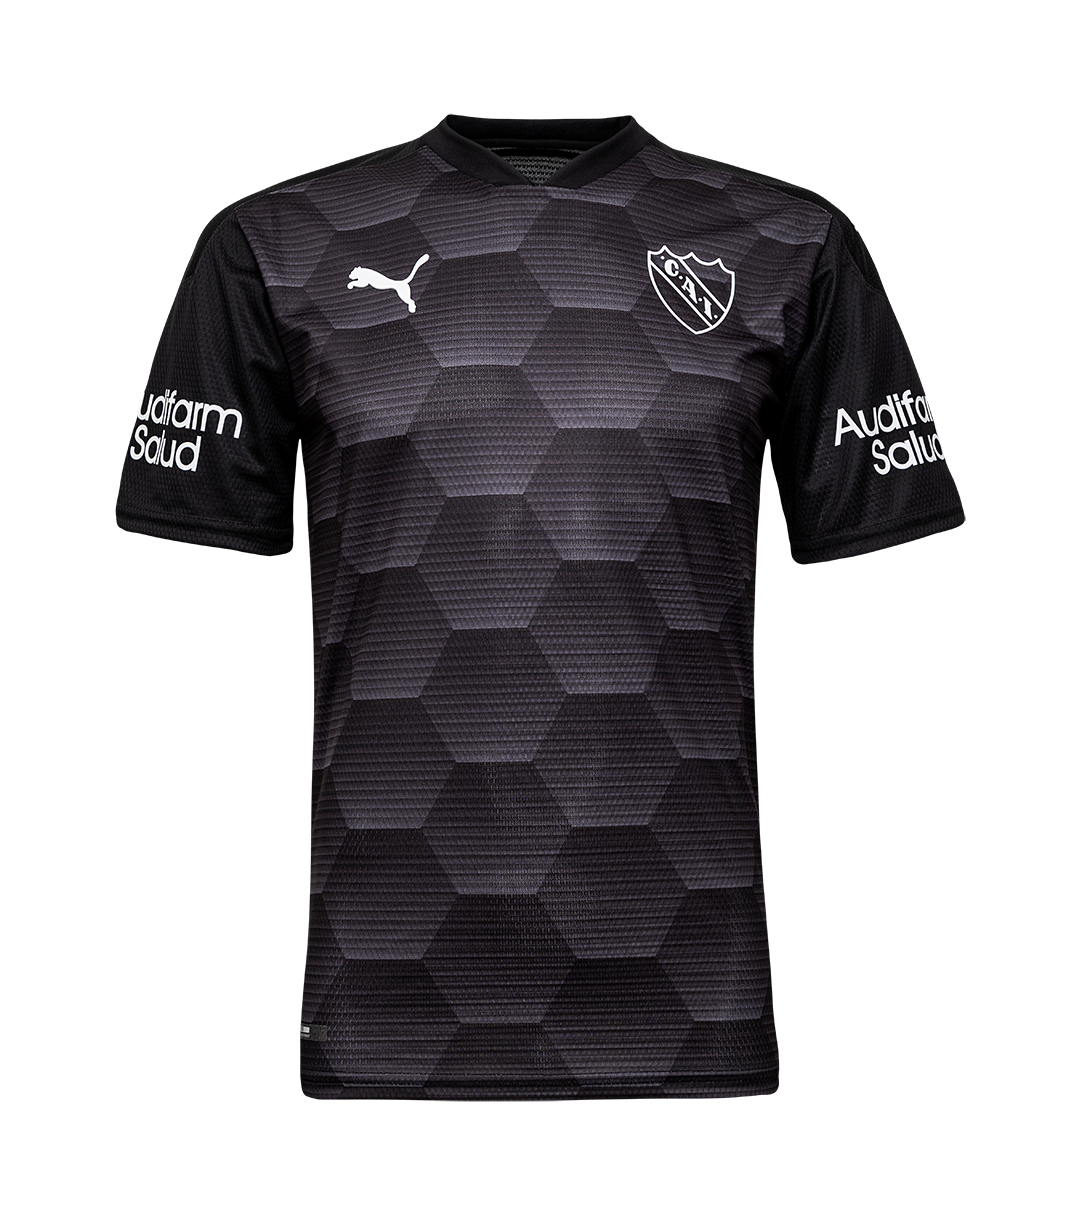 Camisetas PUMA de Independiente 2021 Arquero Negra